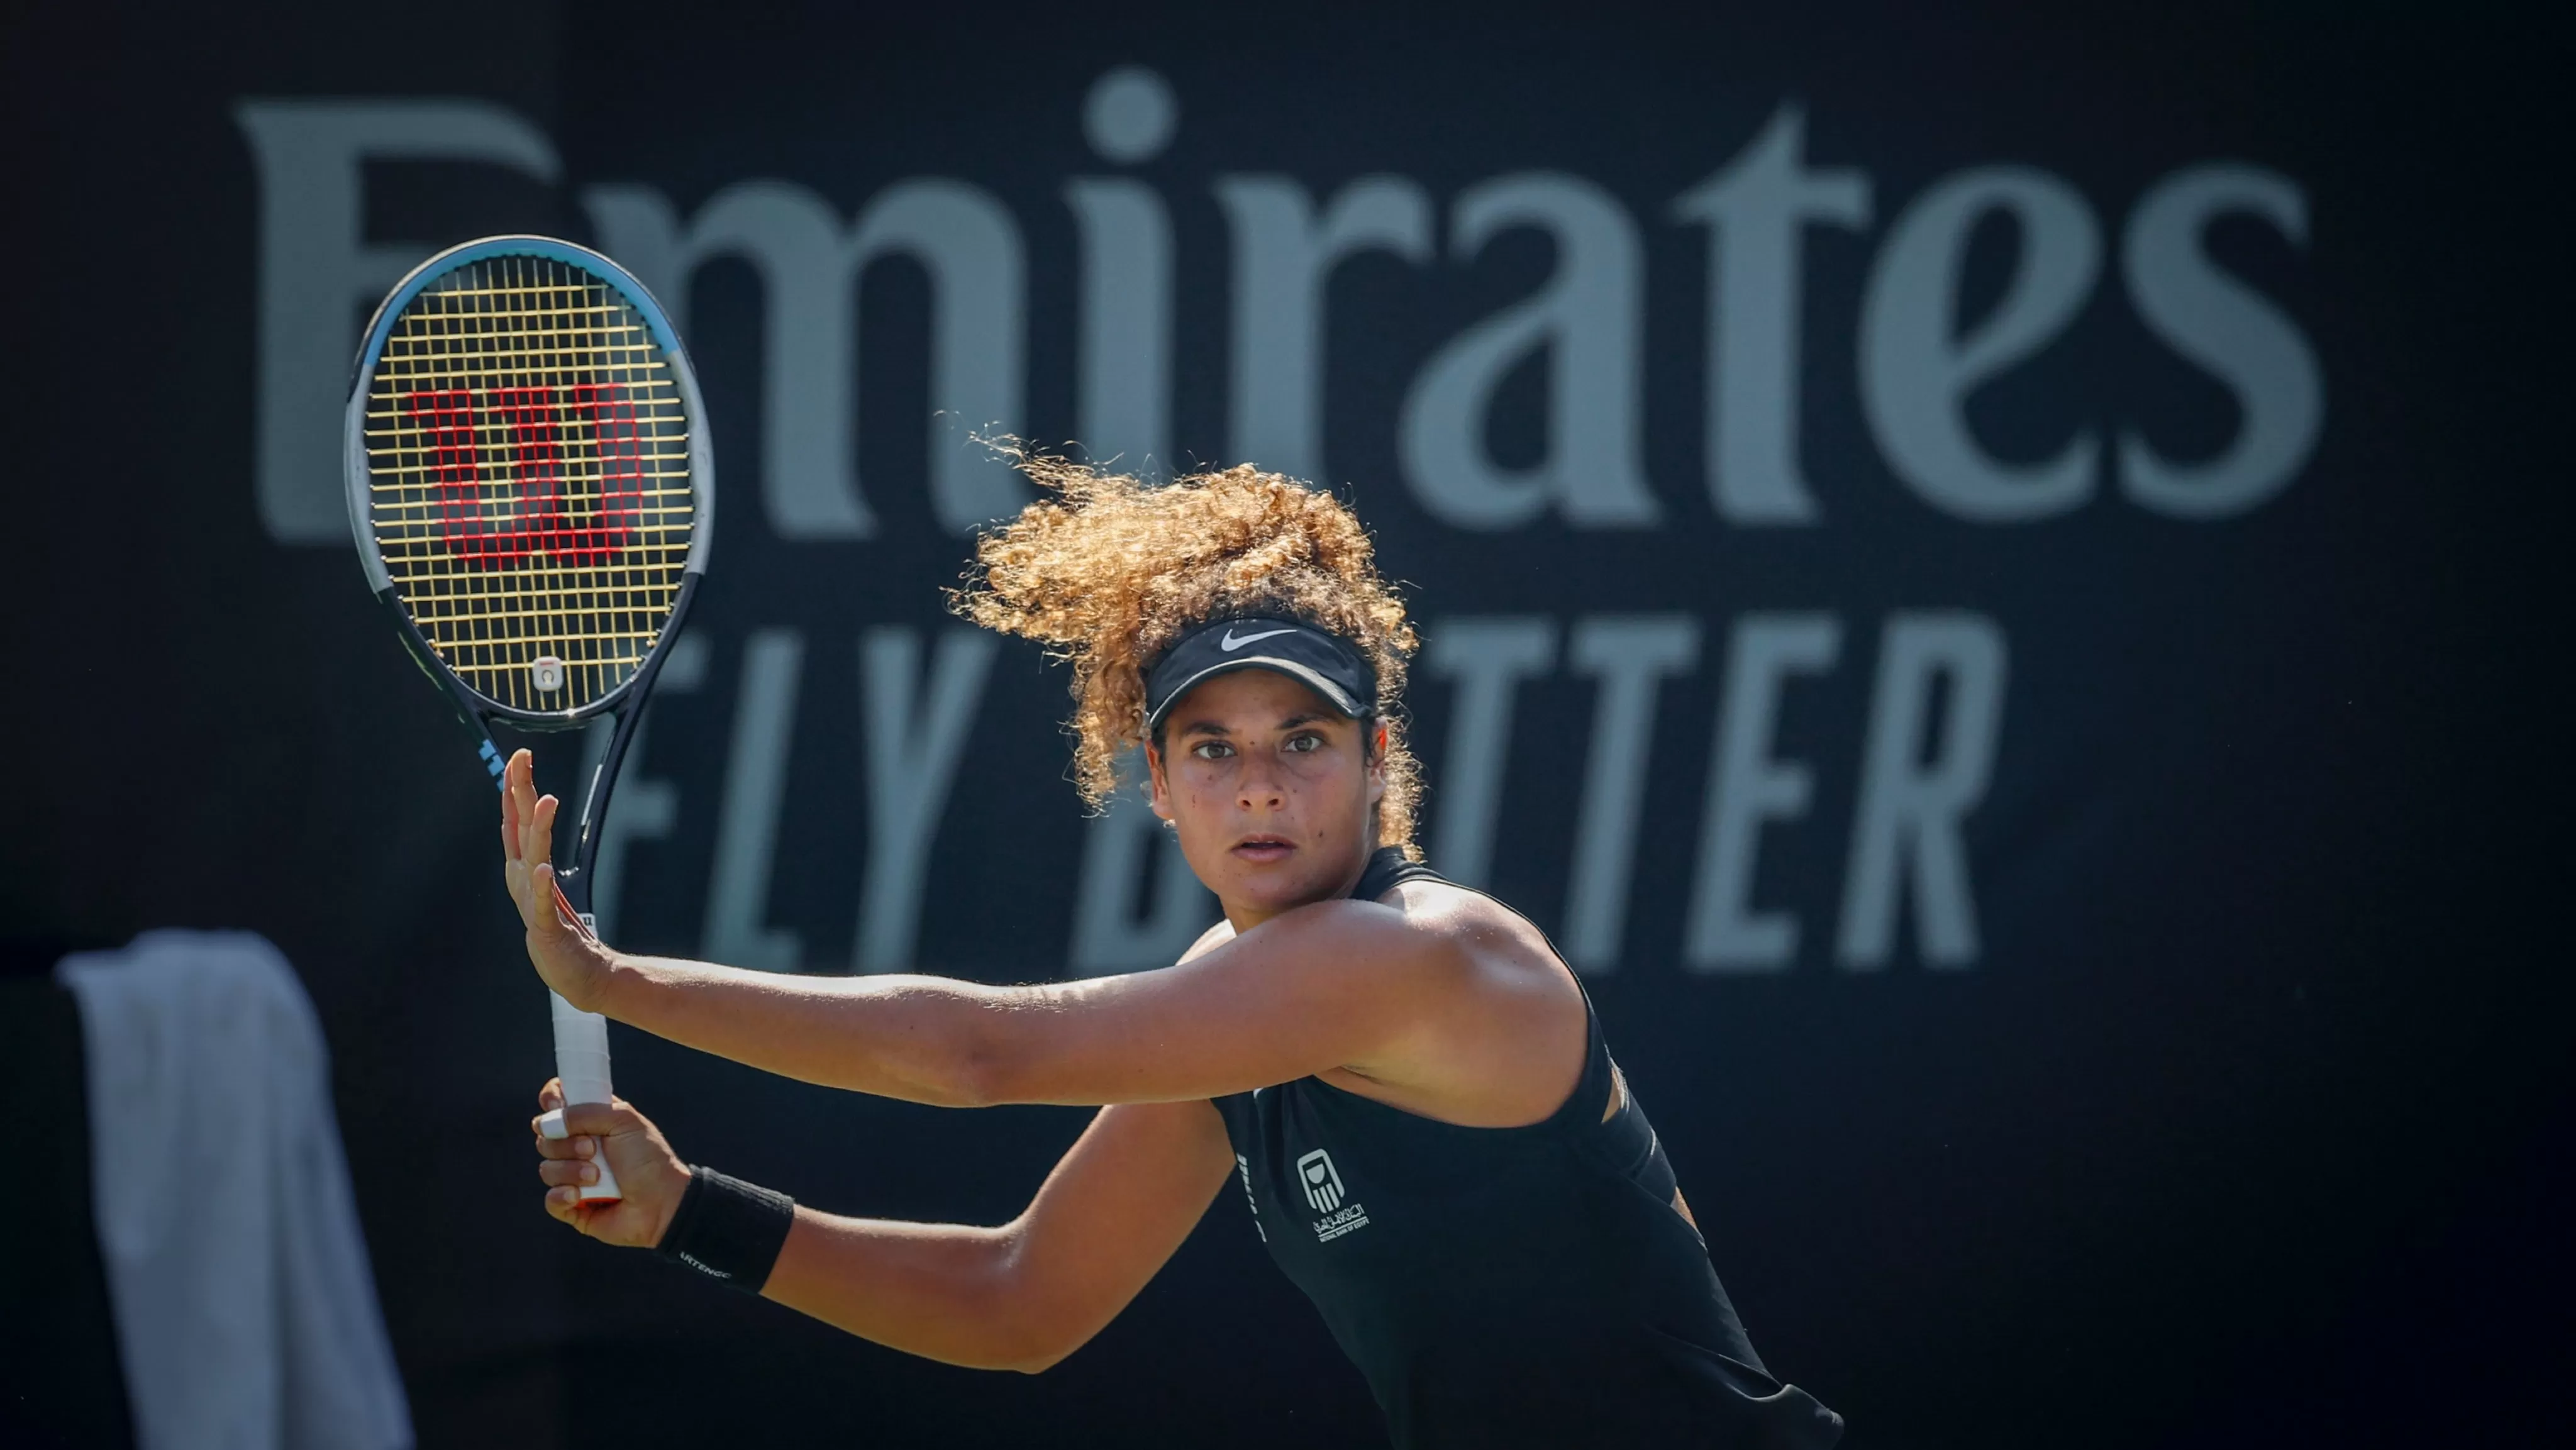 Australia deniega a Djokovic peticiones sobre cuarentena de tenistas